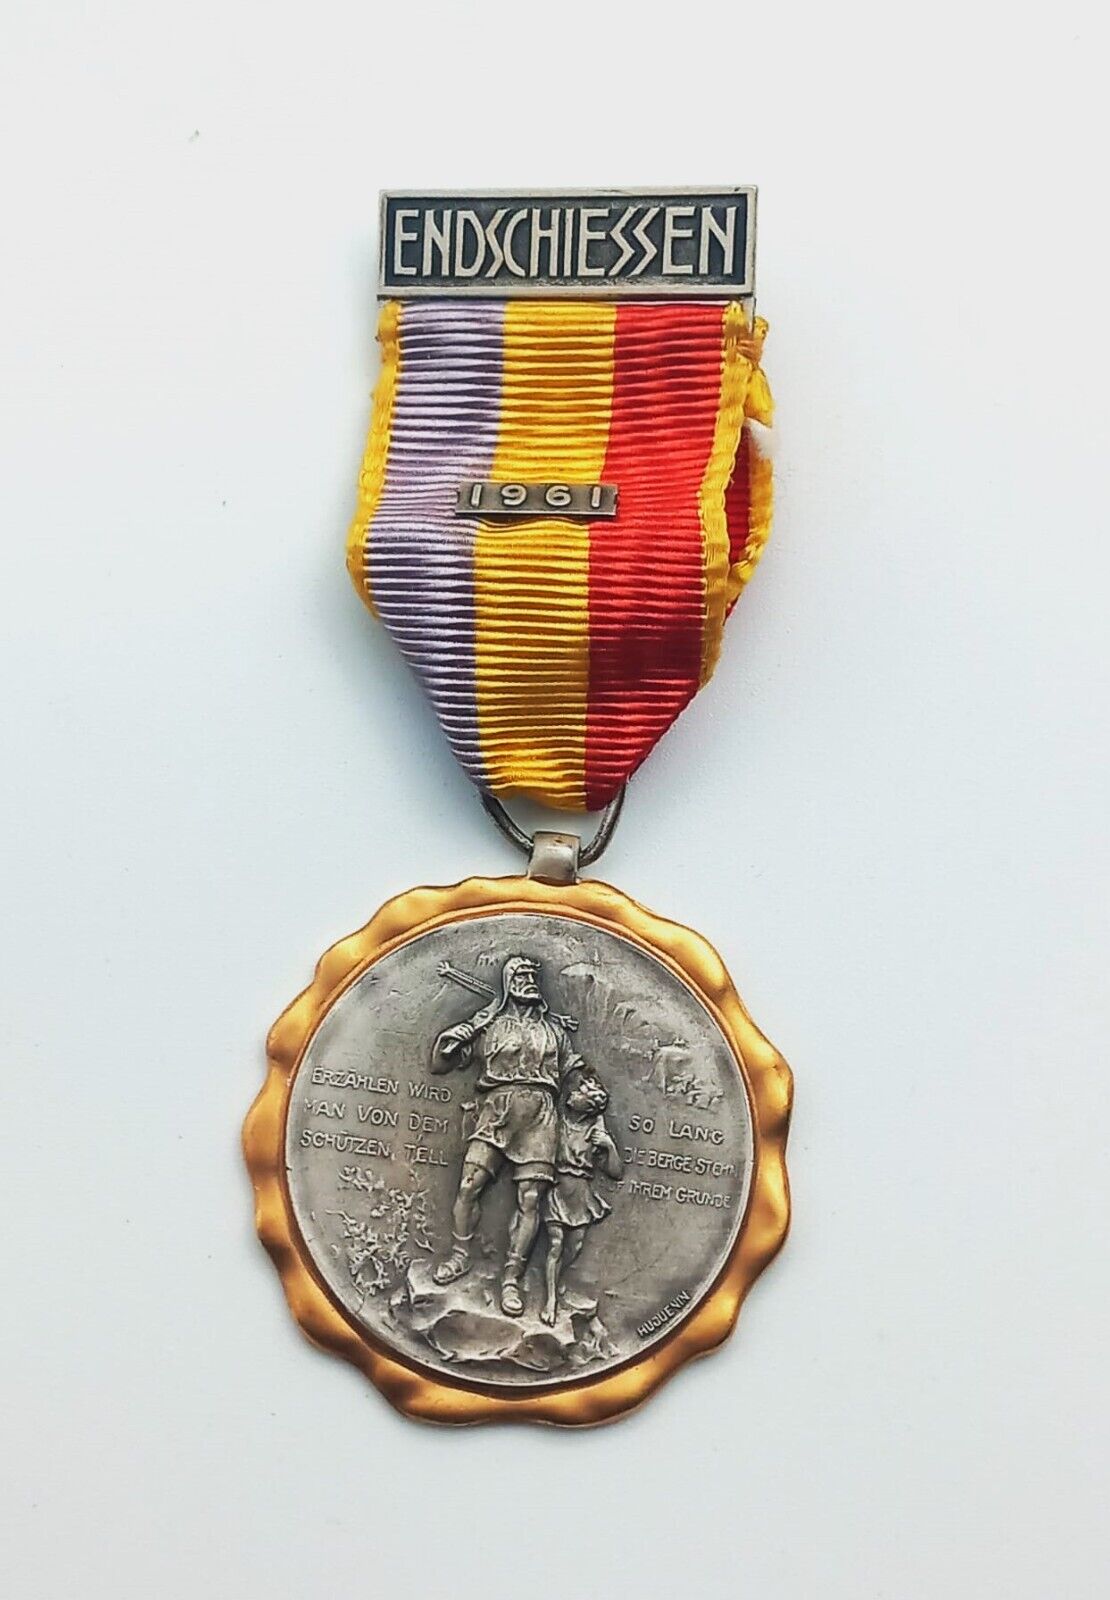 ENDSCHIESSEN 1961 swiss shotting ribon medal badge maker marked bimetal